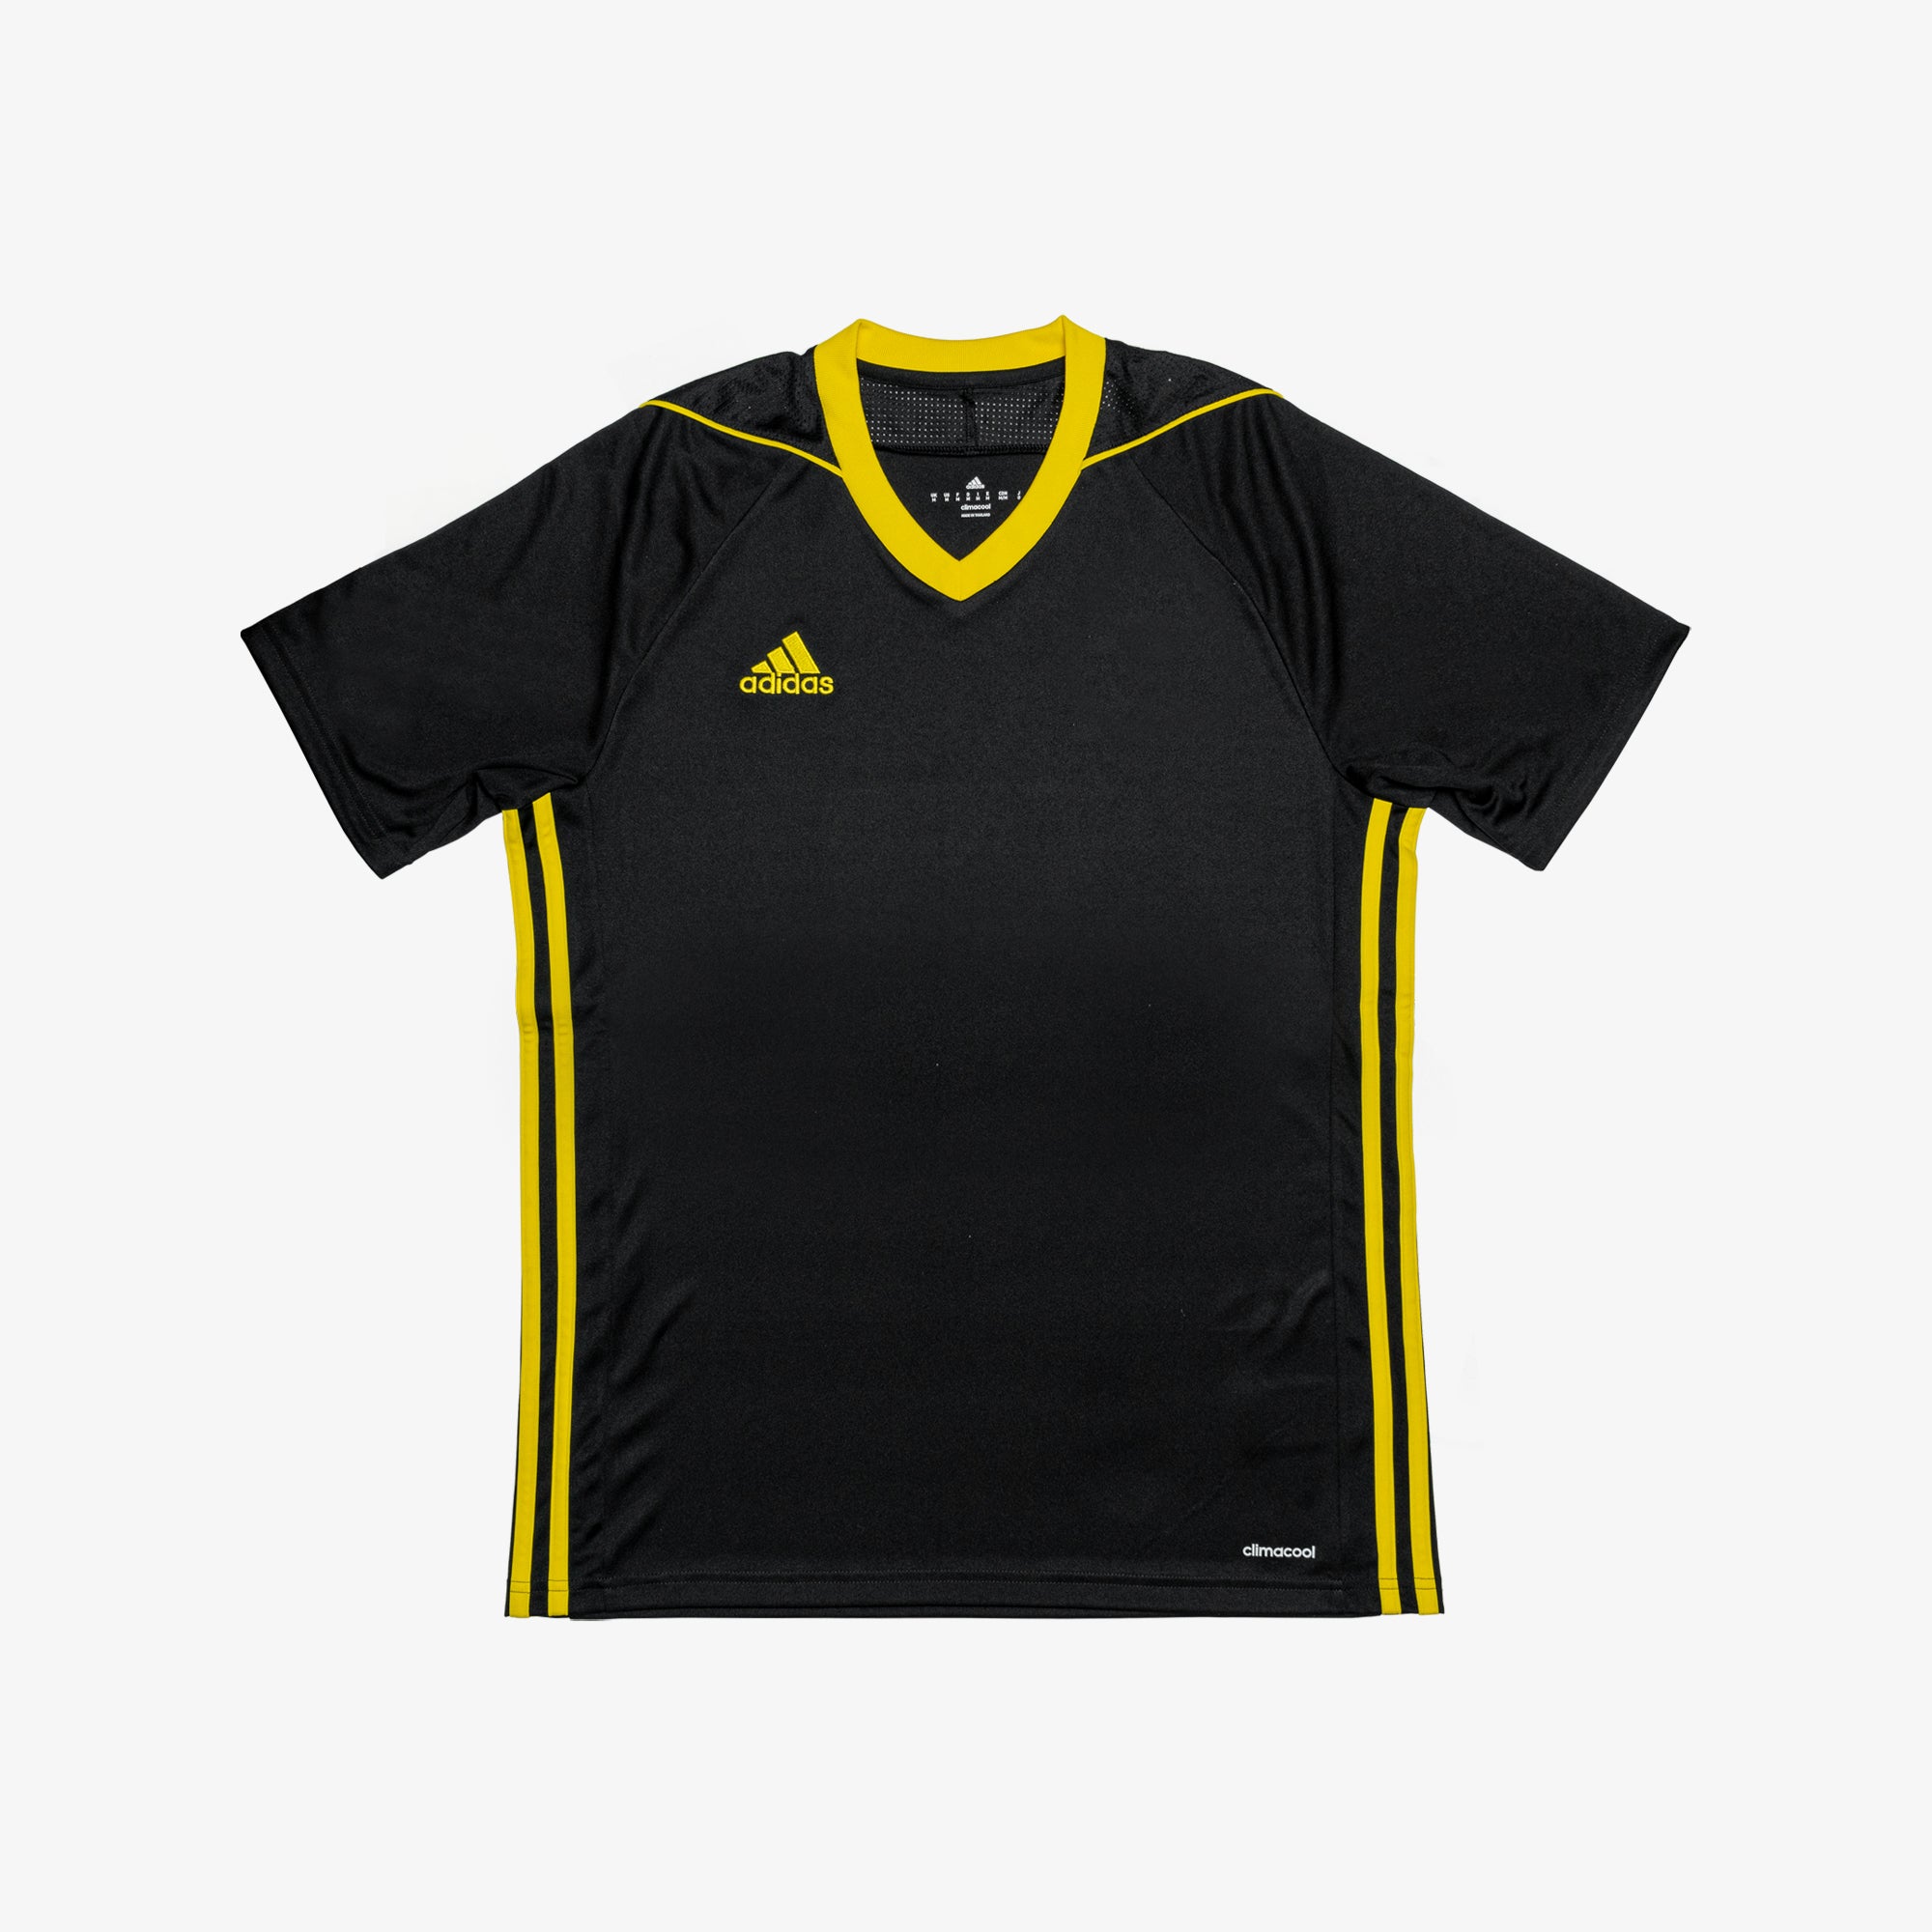 adidas Tiro 17 Soccer Jersey Black/Yellow Women's